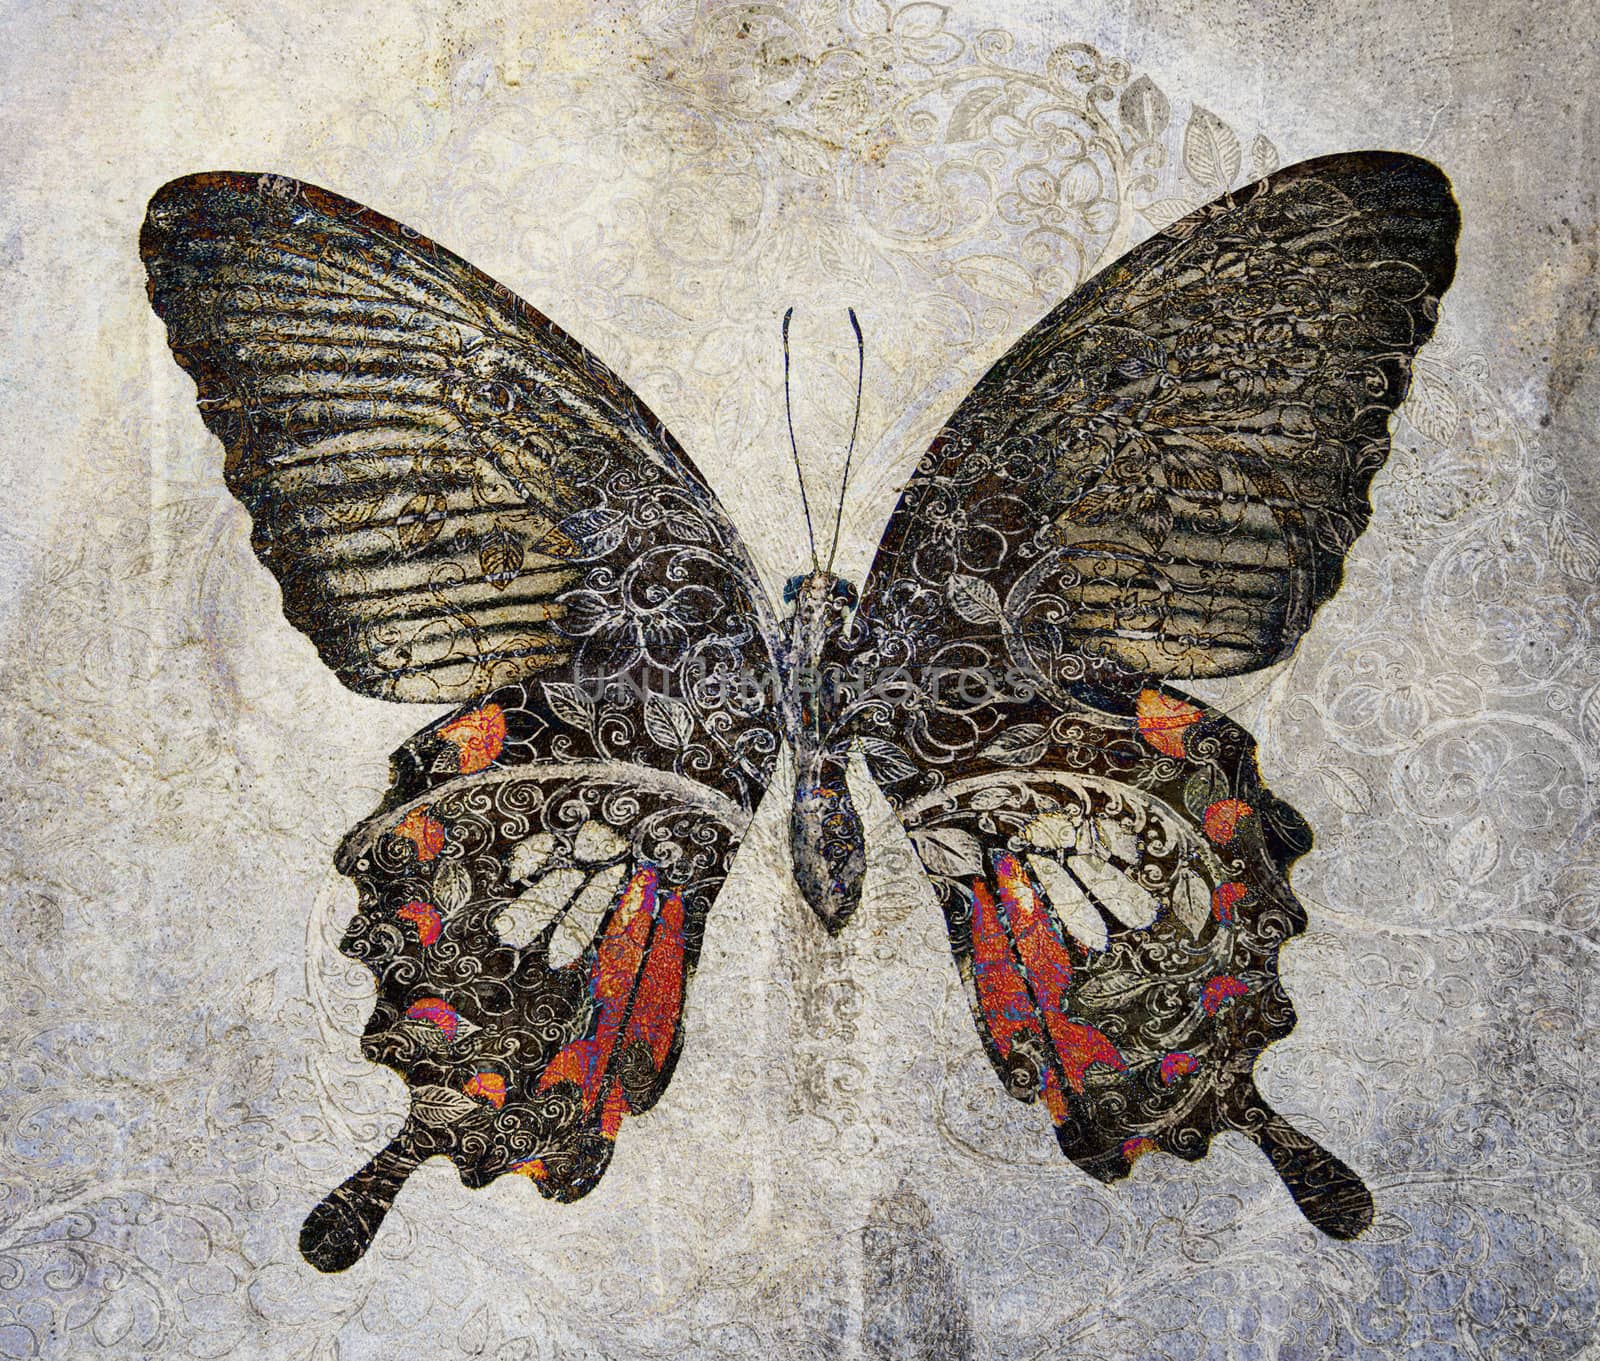  a grunge butterfly wallpaper texture  image 